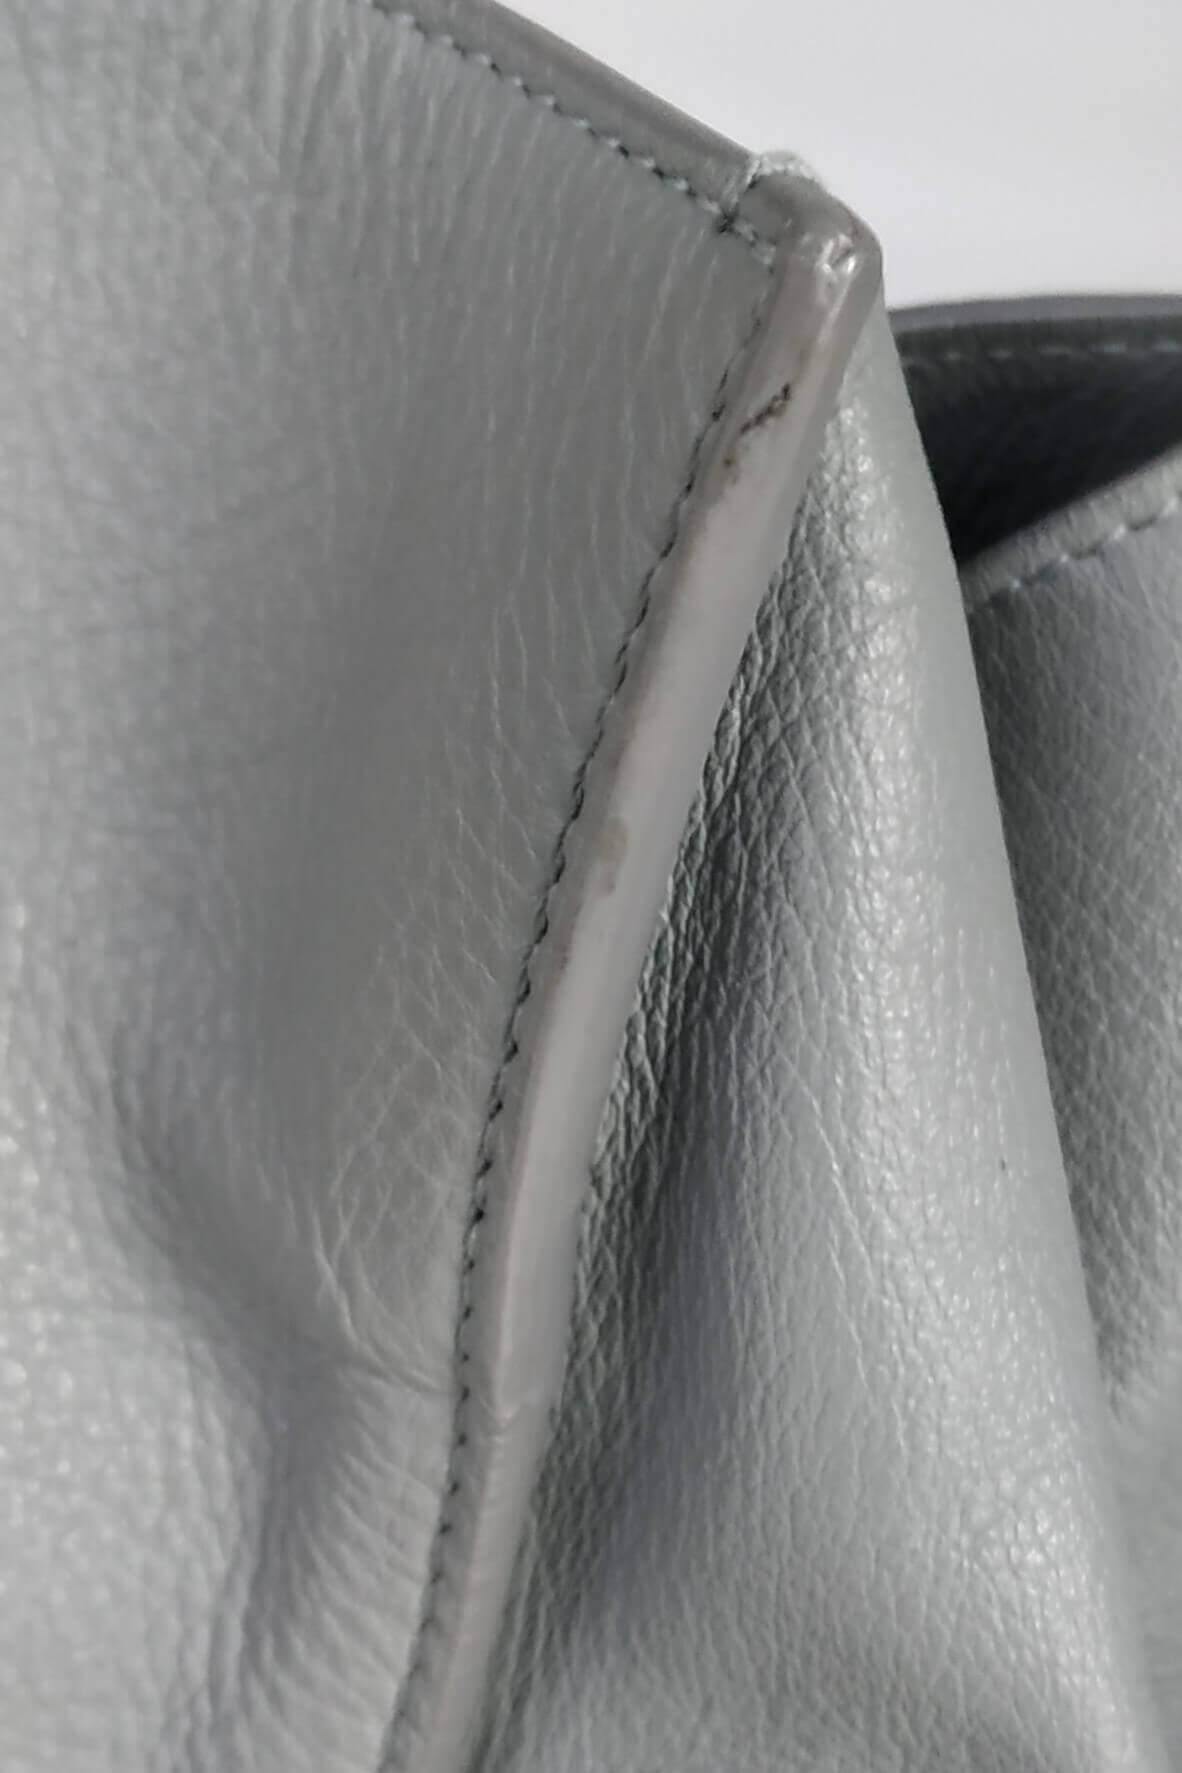 New $2225 Balenciaga Papier Leather A5 Zip Around Graine Double Black Tote  Bag